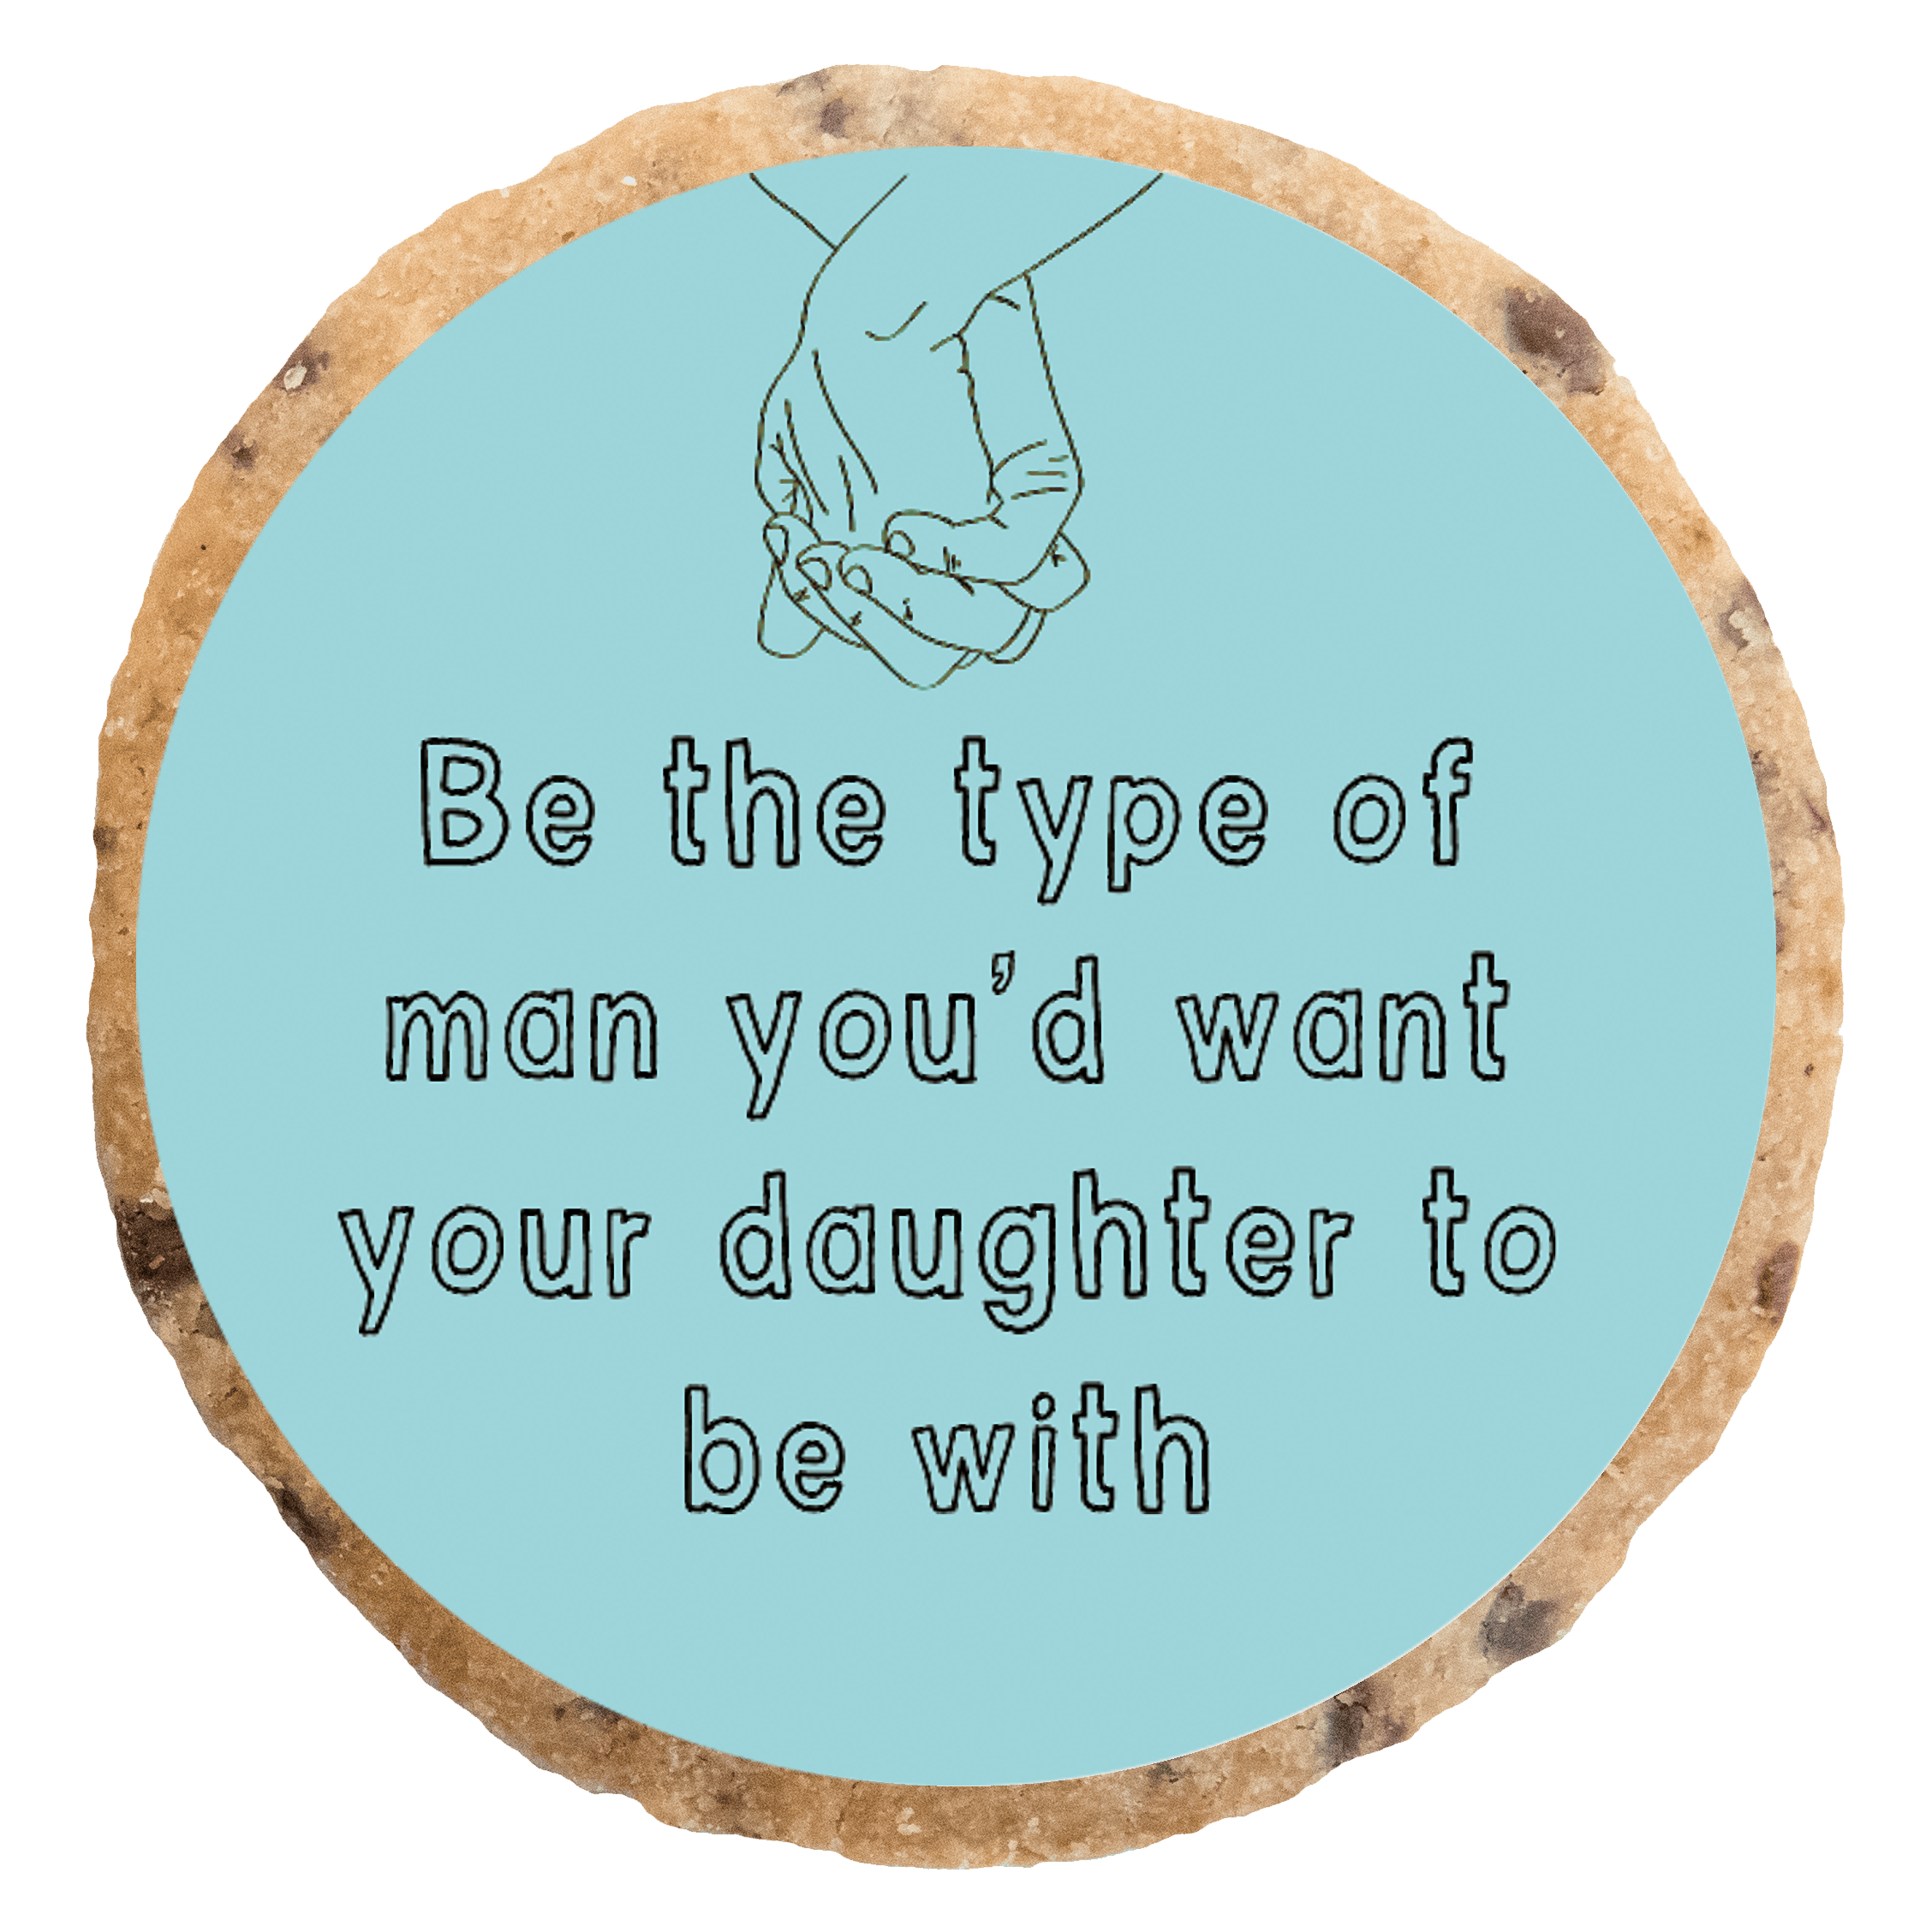 "Be the type of man" MotivKEKS